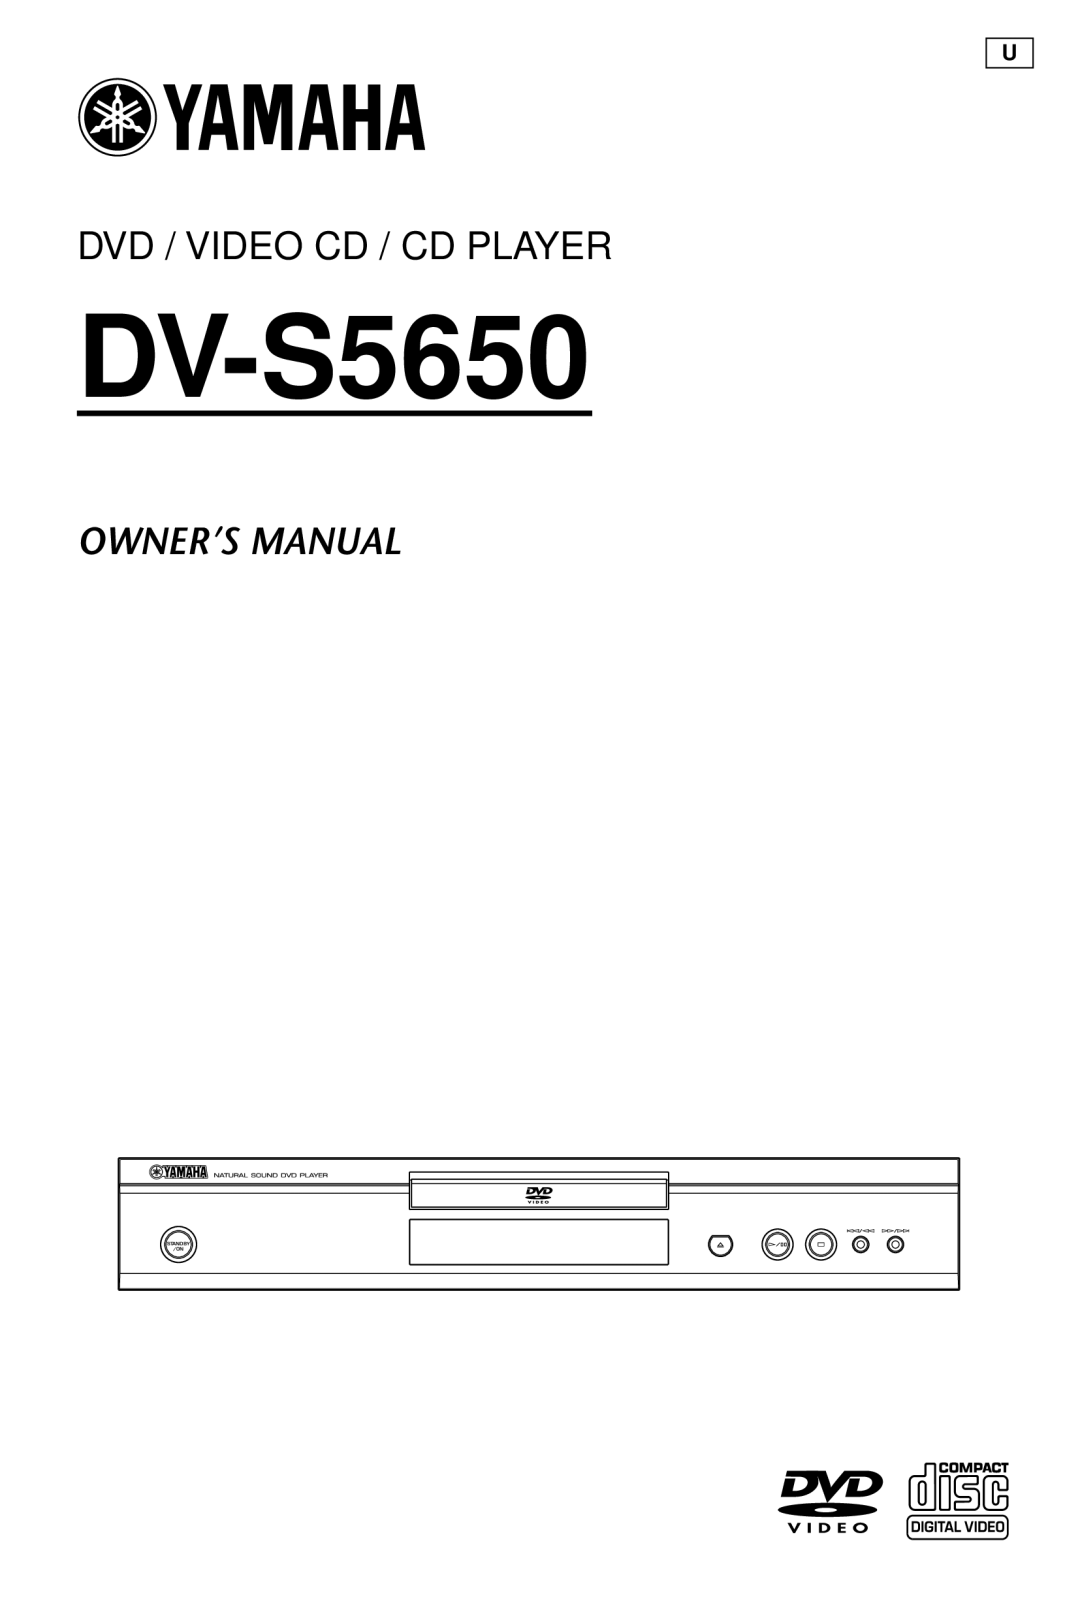 Yamaha DV-S5650 owner manual Dvd / Video Cd / Cd Player, Owner’S Manual 